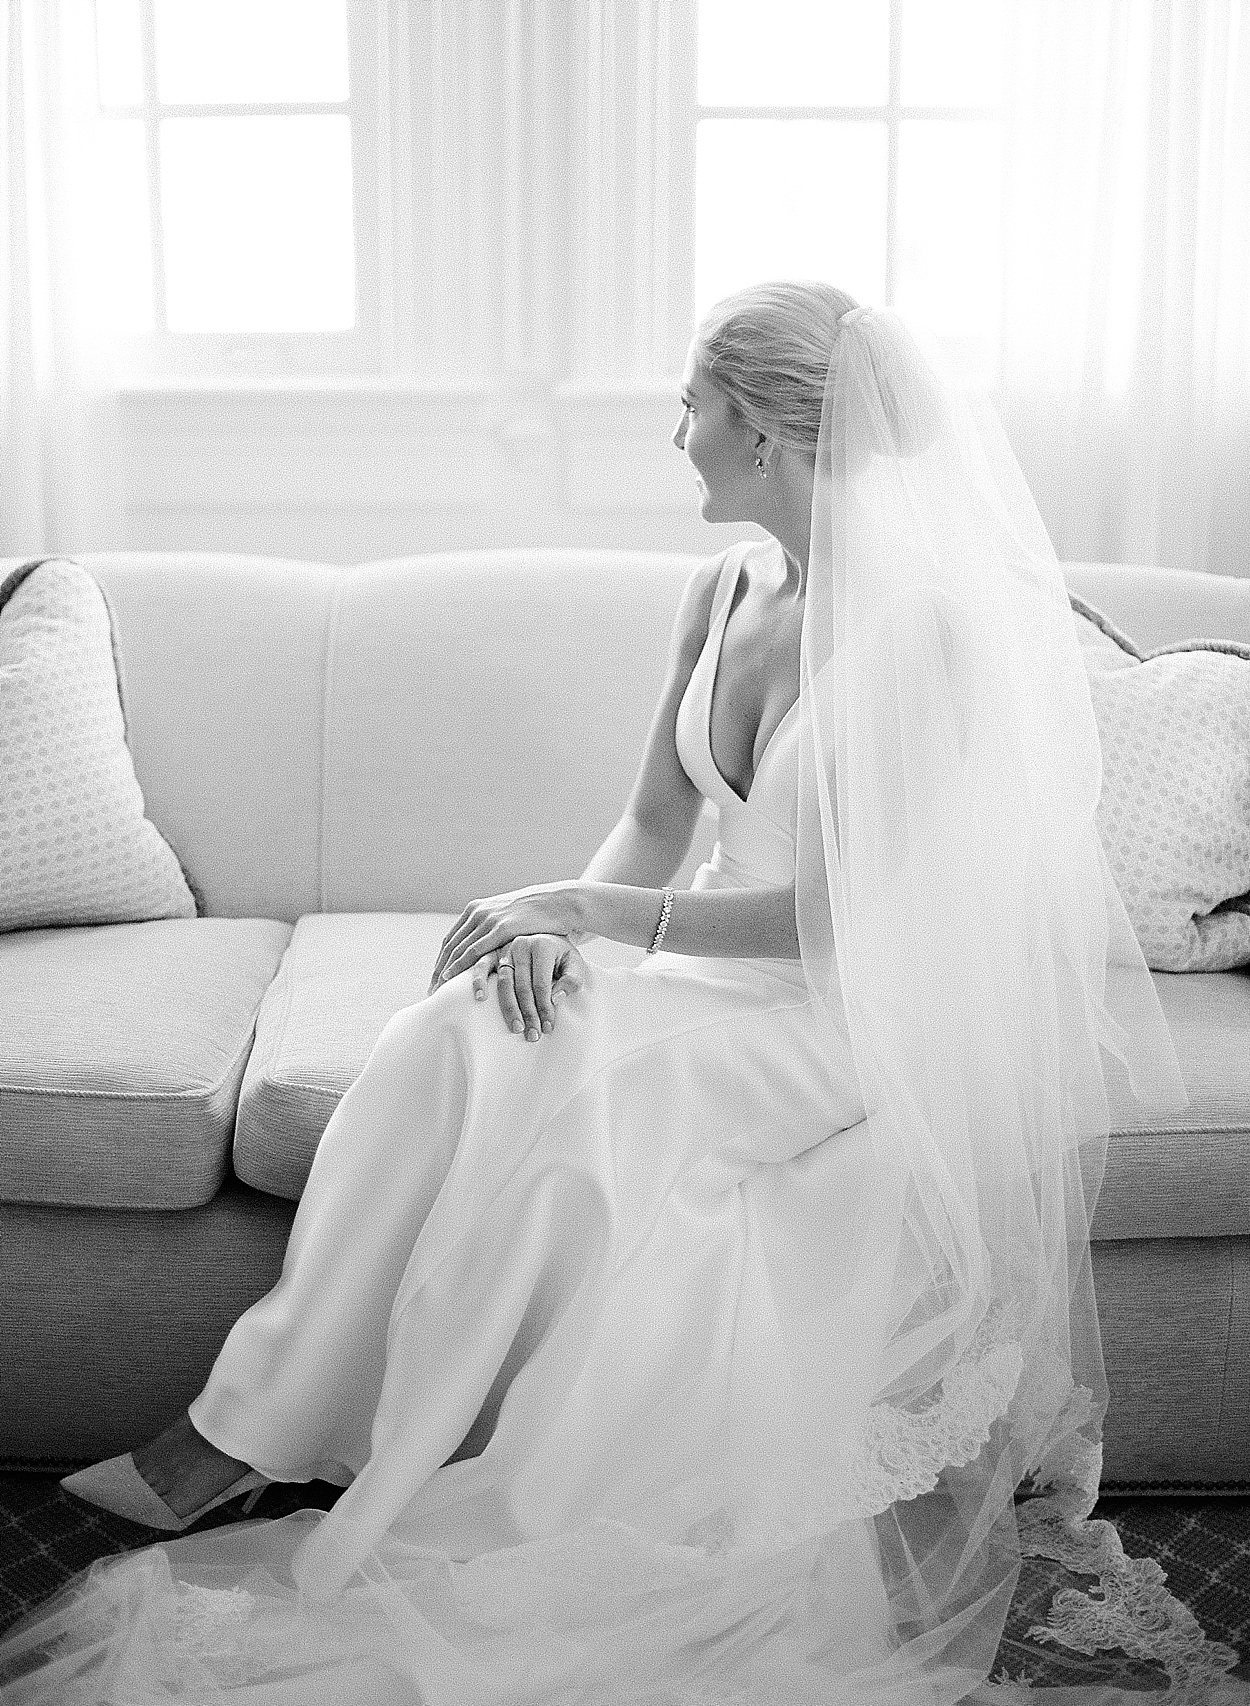 Stylish DC wedding at DAR | Abby Grace Photography